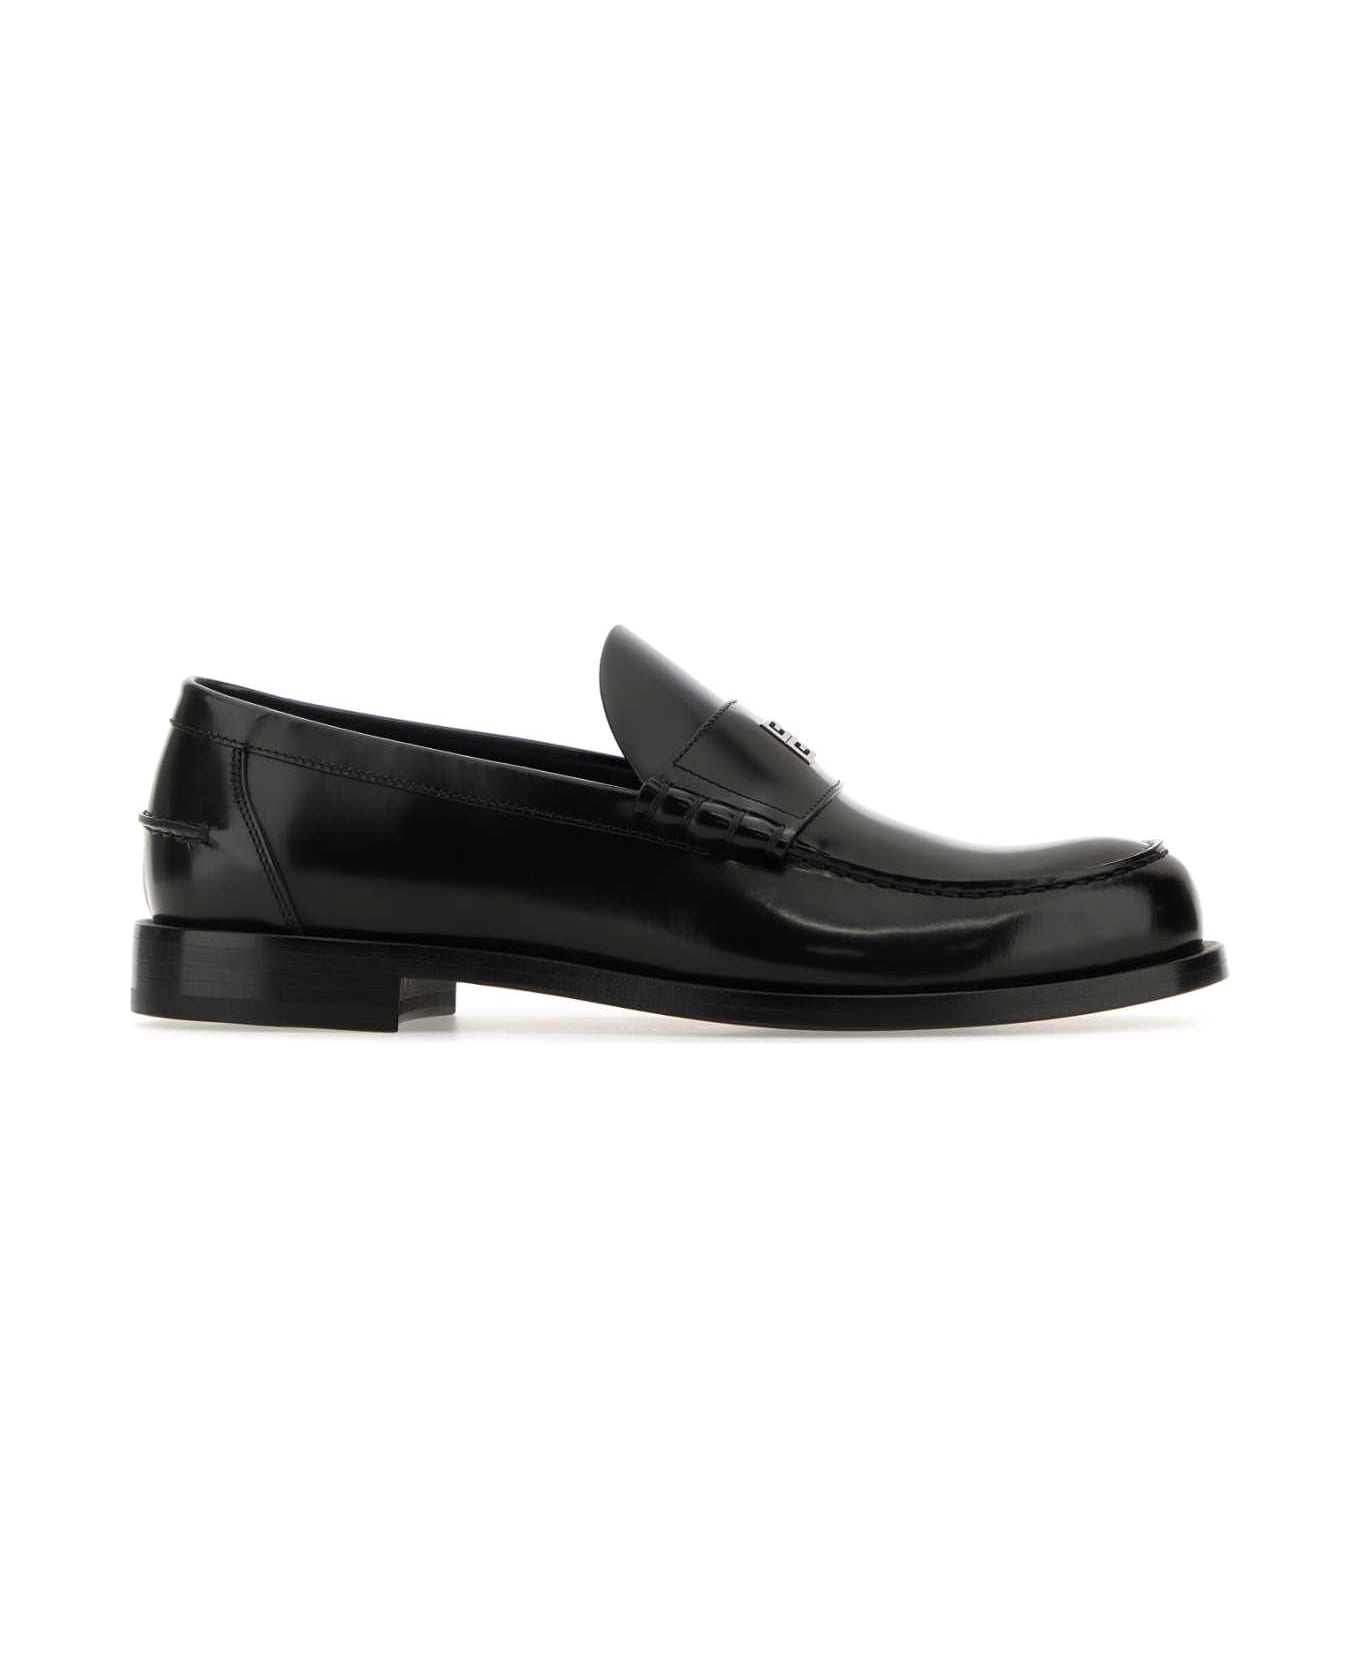 Givenchy Black Leather Mr G Loafers - BLACK